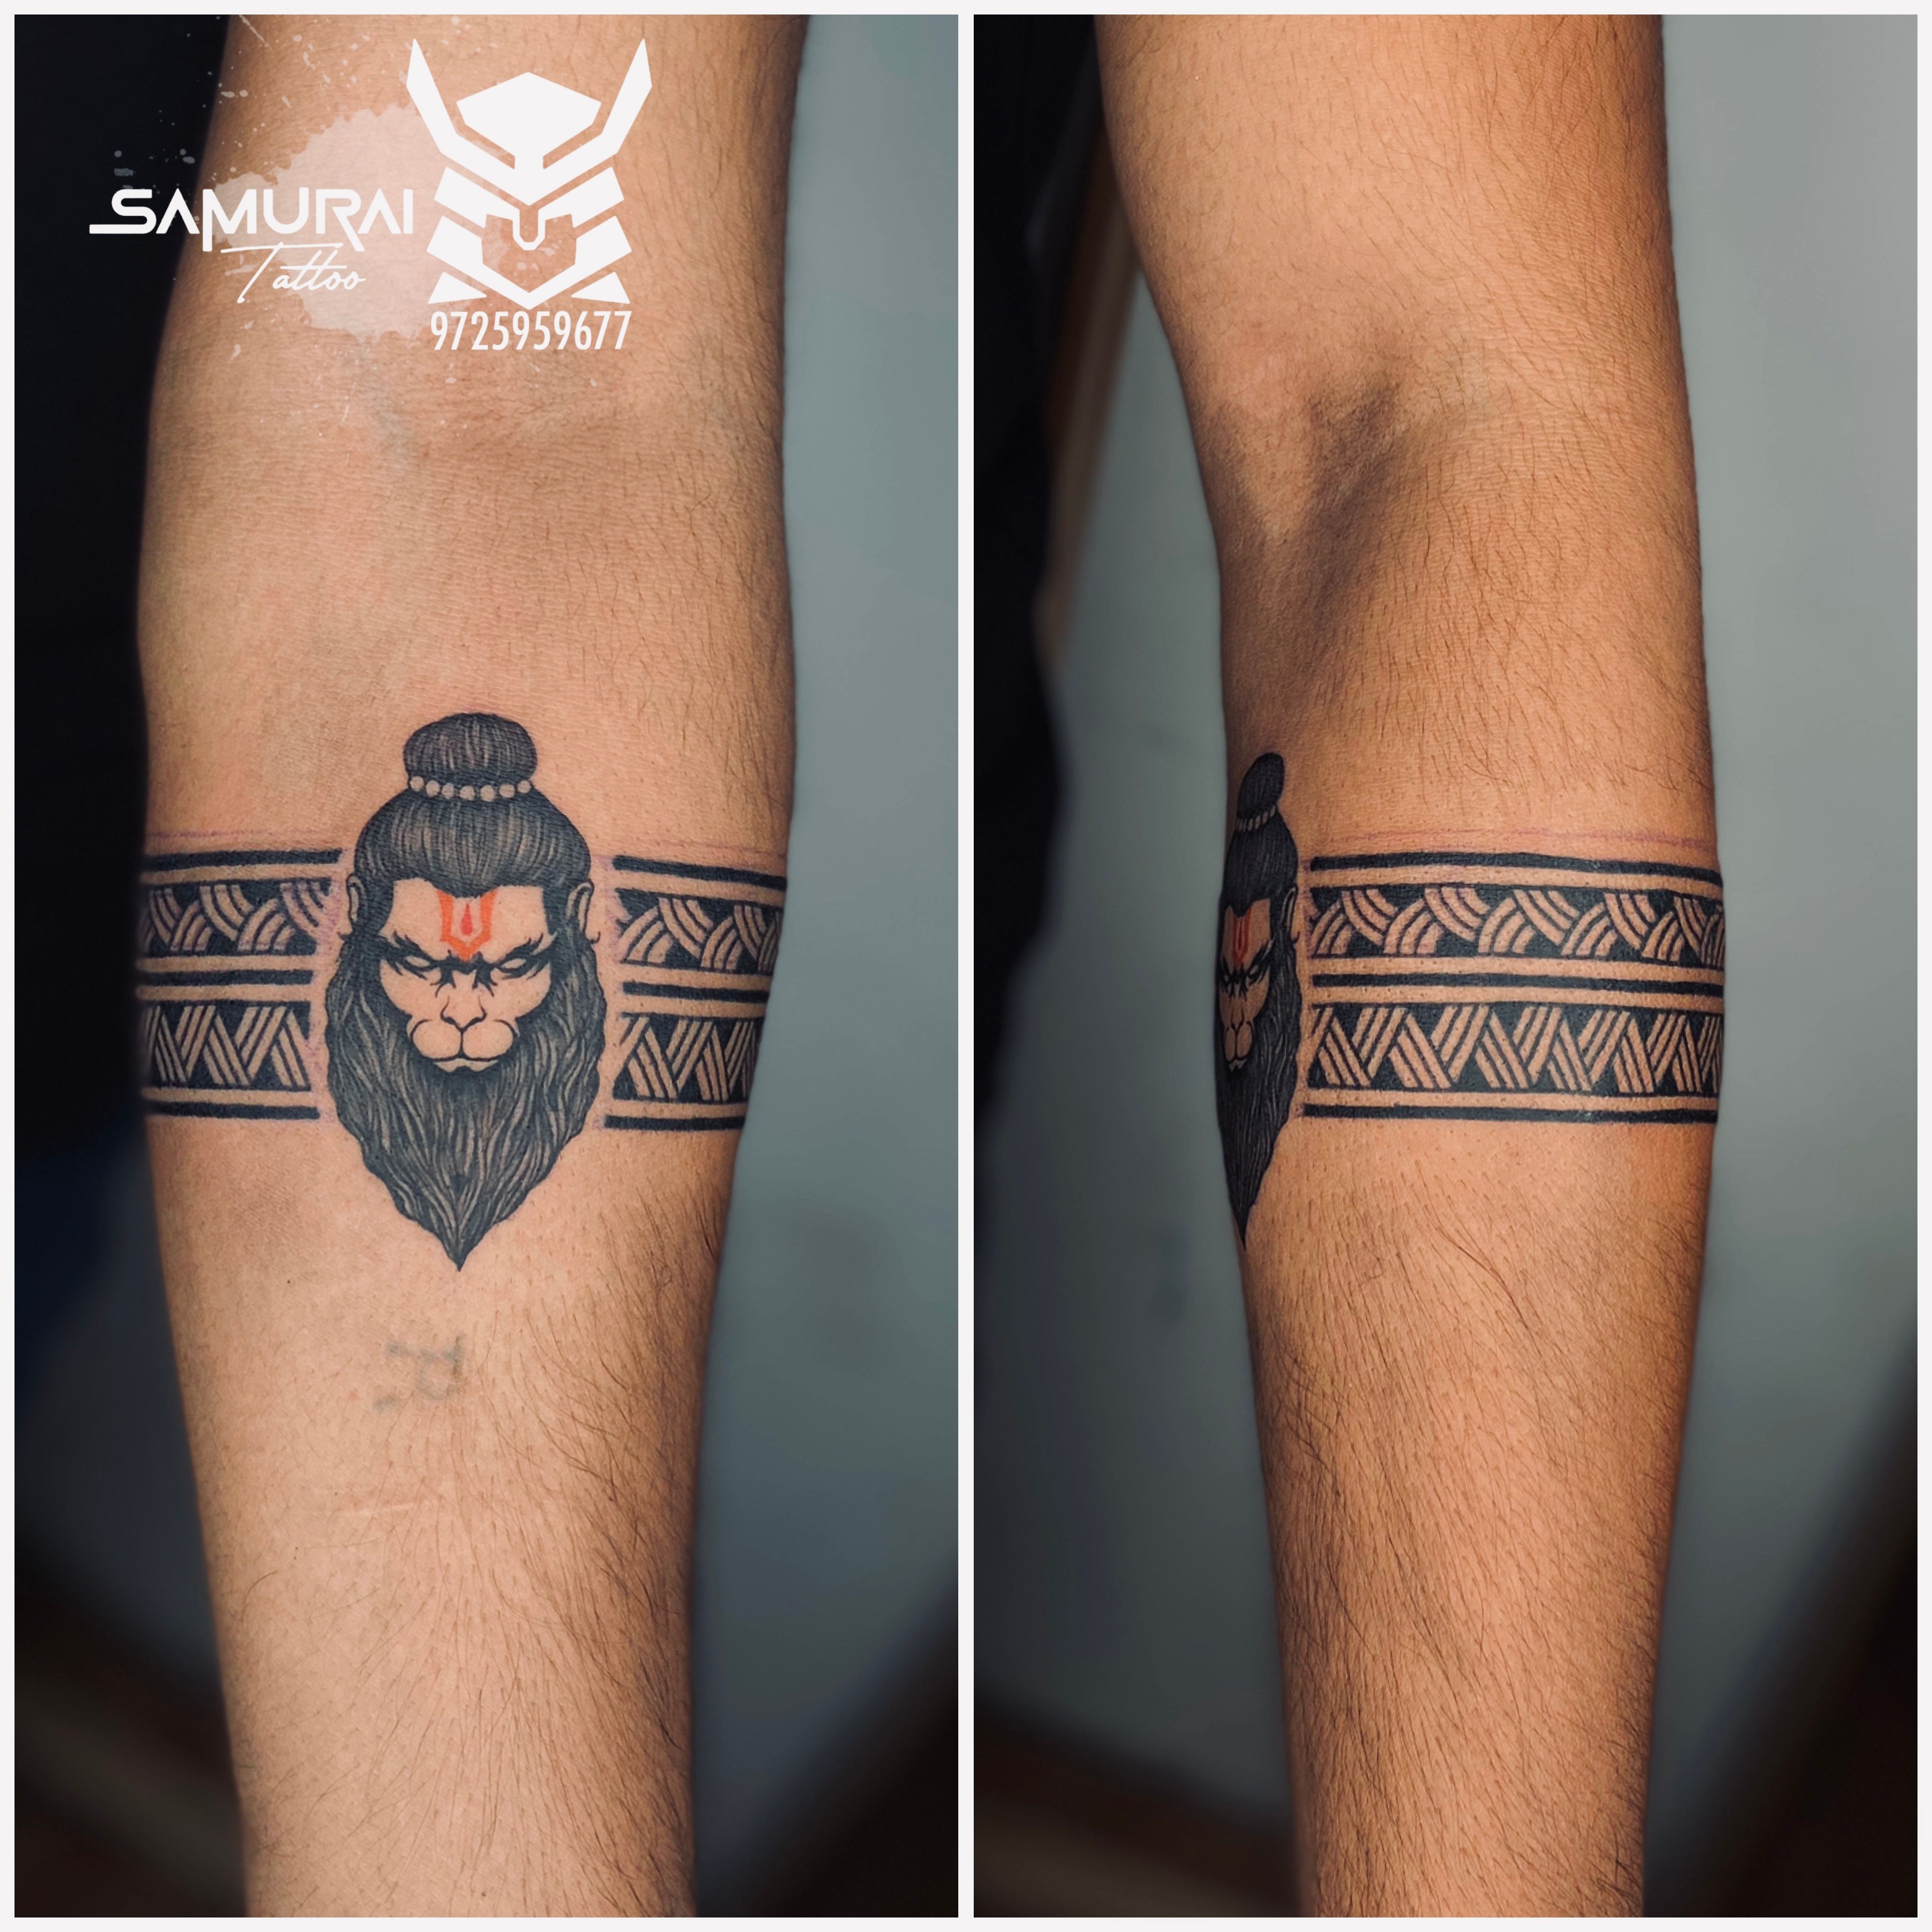 Armband Tattoo | Arm band tattoo, Band tattoo designs, Forearm band tattoos